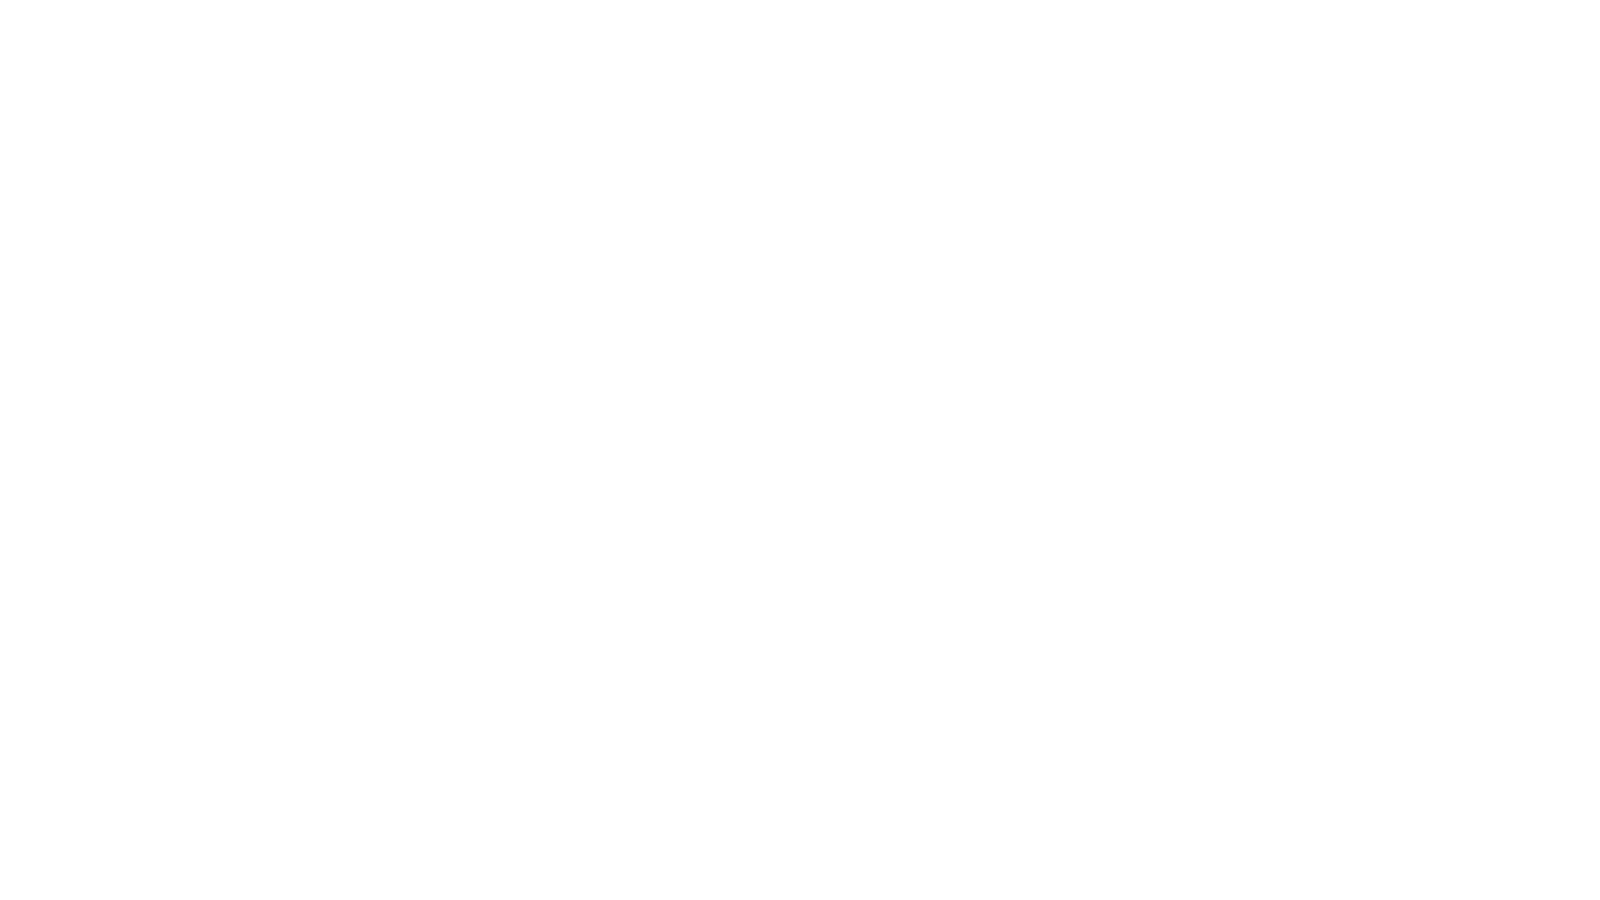 #soundscape #industrial #experimental 

Sequencer: 
Sequentix Cirklon

Soundsources:
Noise Engineering Basimilus Iteritas Alter, Loquelic Iteritas Alter
Michigan Synth Works SY0.5
Qubit Electronix Nebulae v2
Industrial Music Electronics Hertz Donut MkIII

FX & Filters:
Qubit Electronix Data Bender
Rossum Electro Music Panharmonium
Noise Engineering Ruina Versio, Desmodus Versio
Intellijel Rainmaker
T-Rex Replicator
4MS Dual Looping Delay
Dreadbox / Crazy Tube Circuits White Line Splash
Xaoc Devices Belgrad
Roland 505VCF
Strymon BigSky, Timeline, Deco
OTO Machines Bam
Ensoniq DP/4
Eventide H3500B-DFX
Death by Audio Reverberation Machine